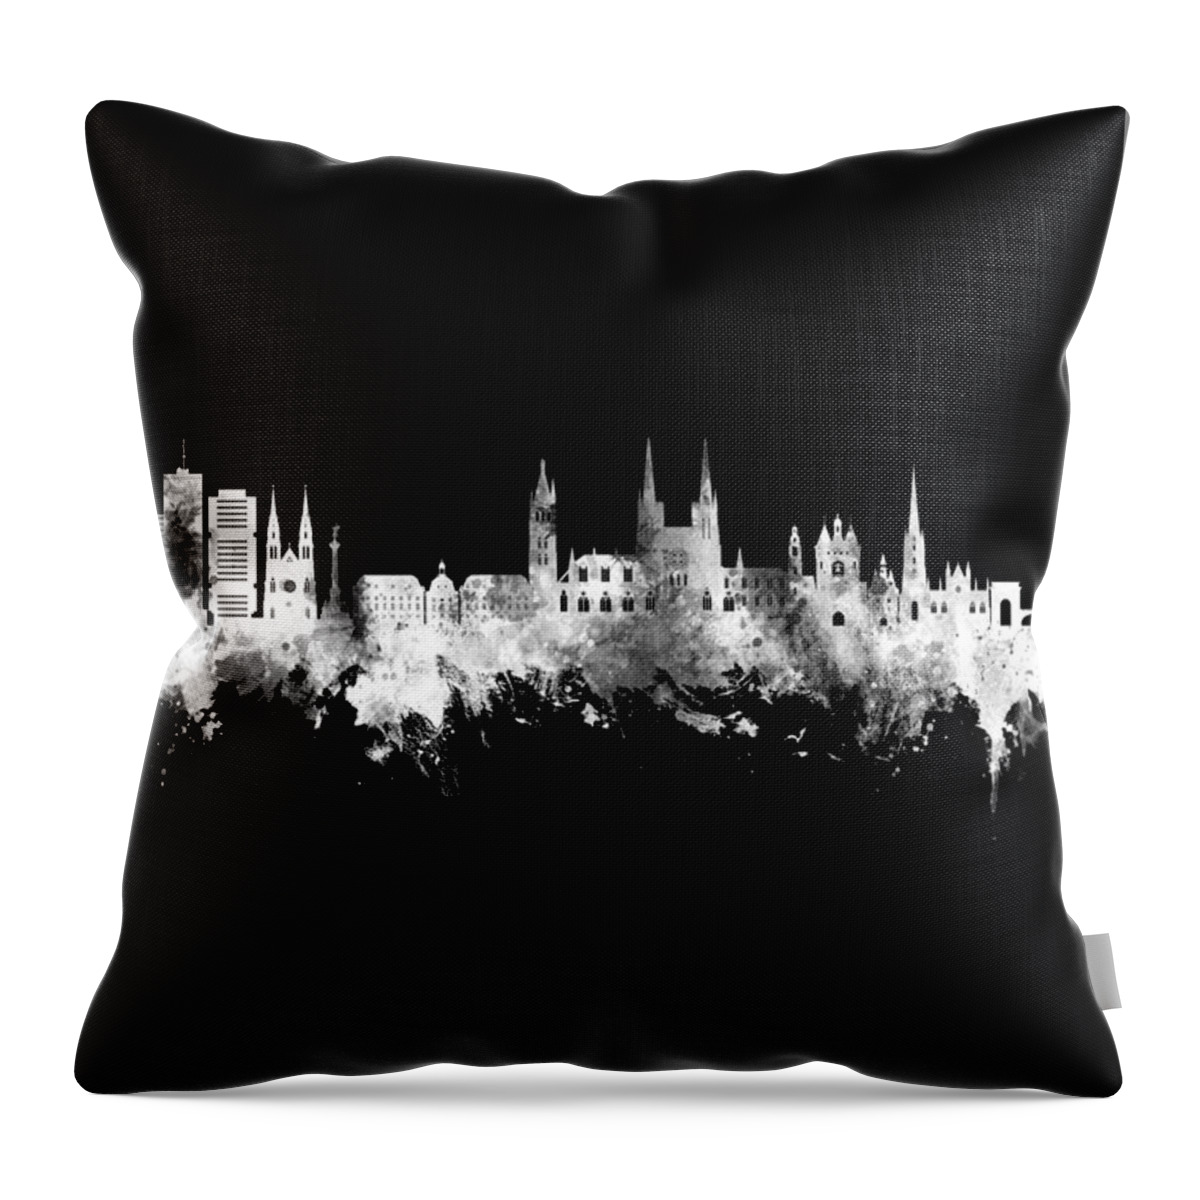 Bordeaux Throw Pillow featuring the digital art Bordeaux France Skyline #49 by Michael Tompsett